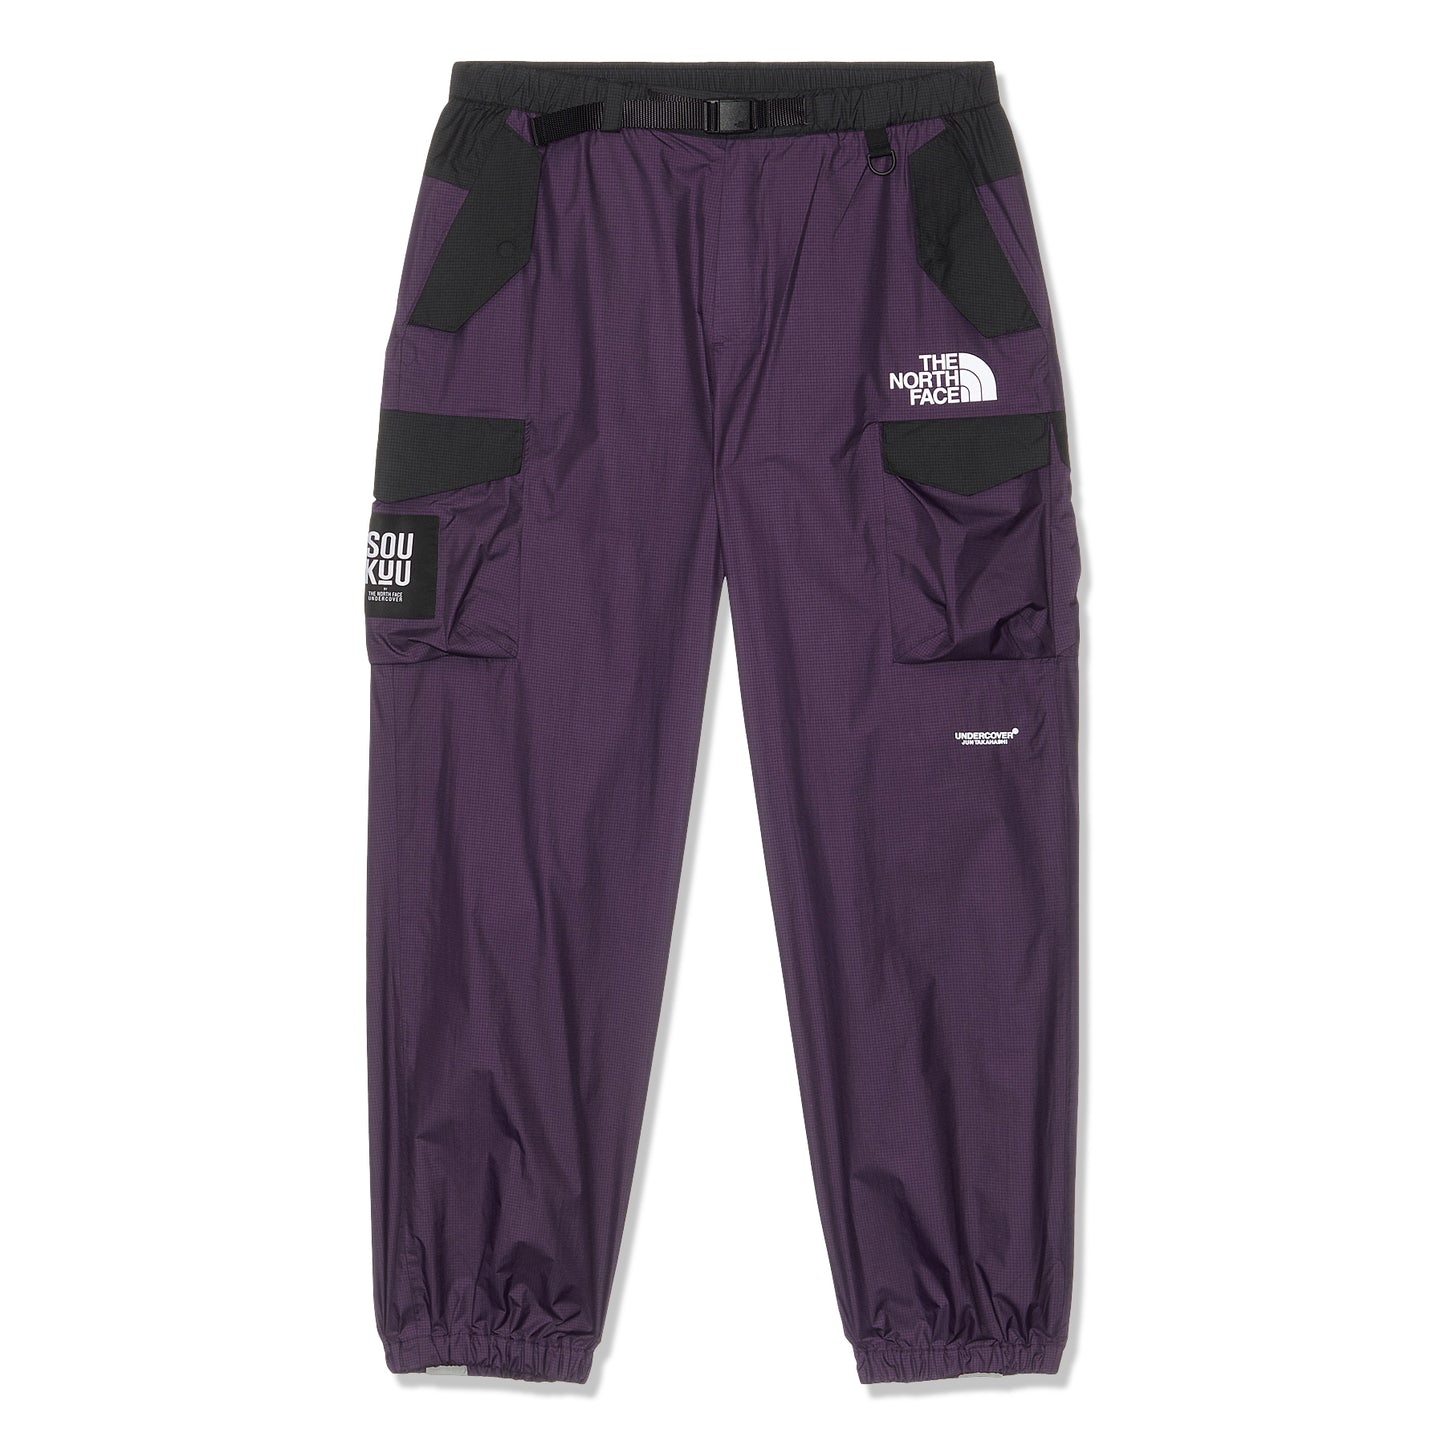 The North Face x SOUKUU Hike Shell Pant (Purple Pennat)